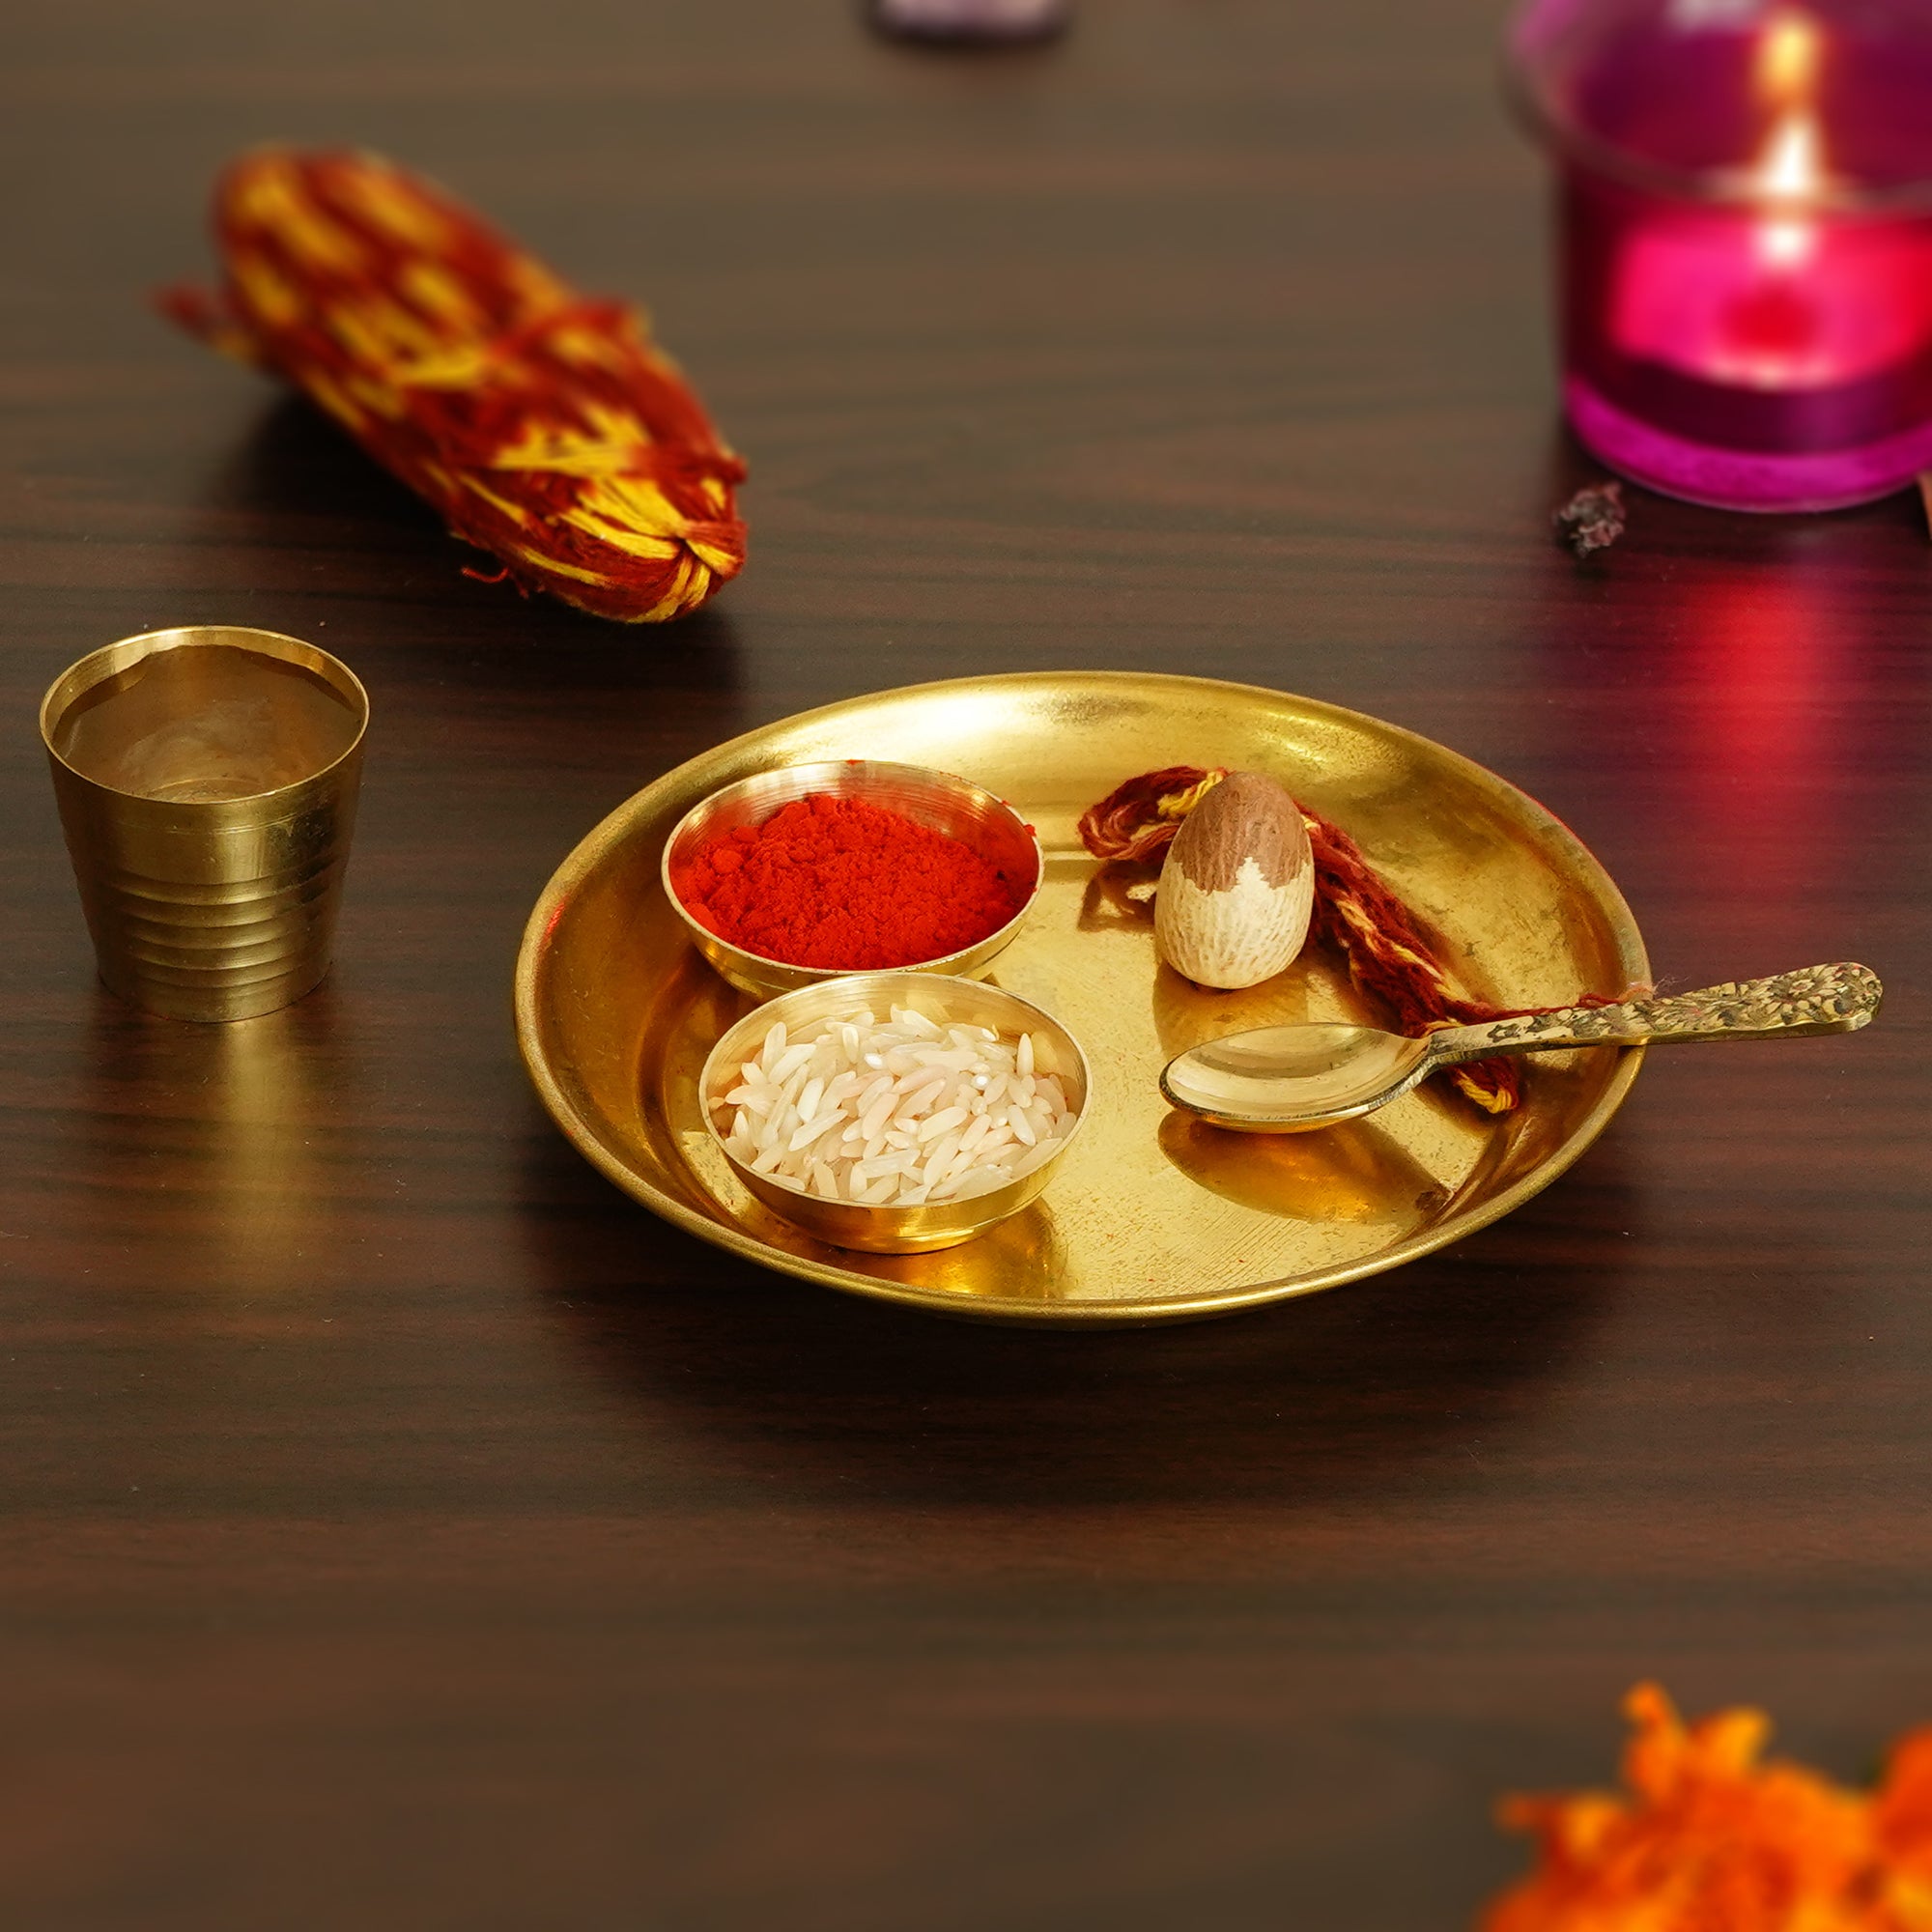 5 Inch Brass Pooja Thali with 2 Katori/Bowls, 1 Spoon and 1 Glass